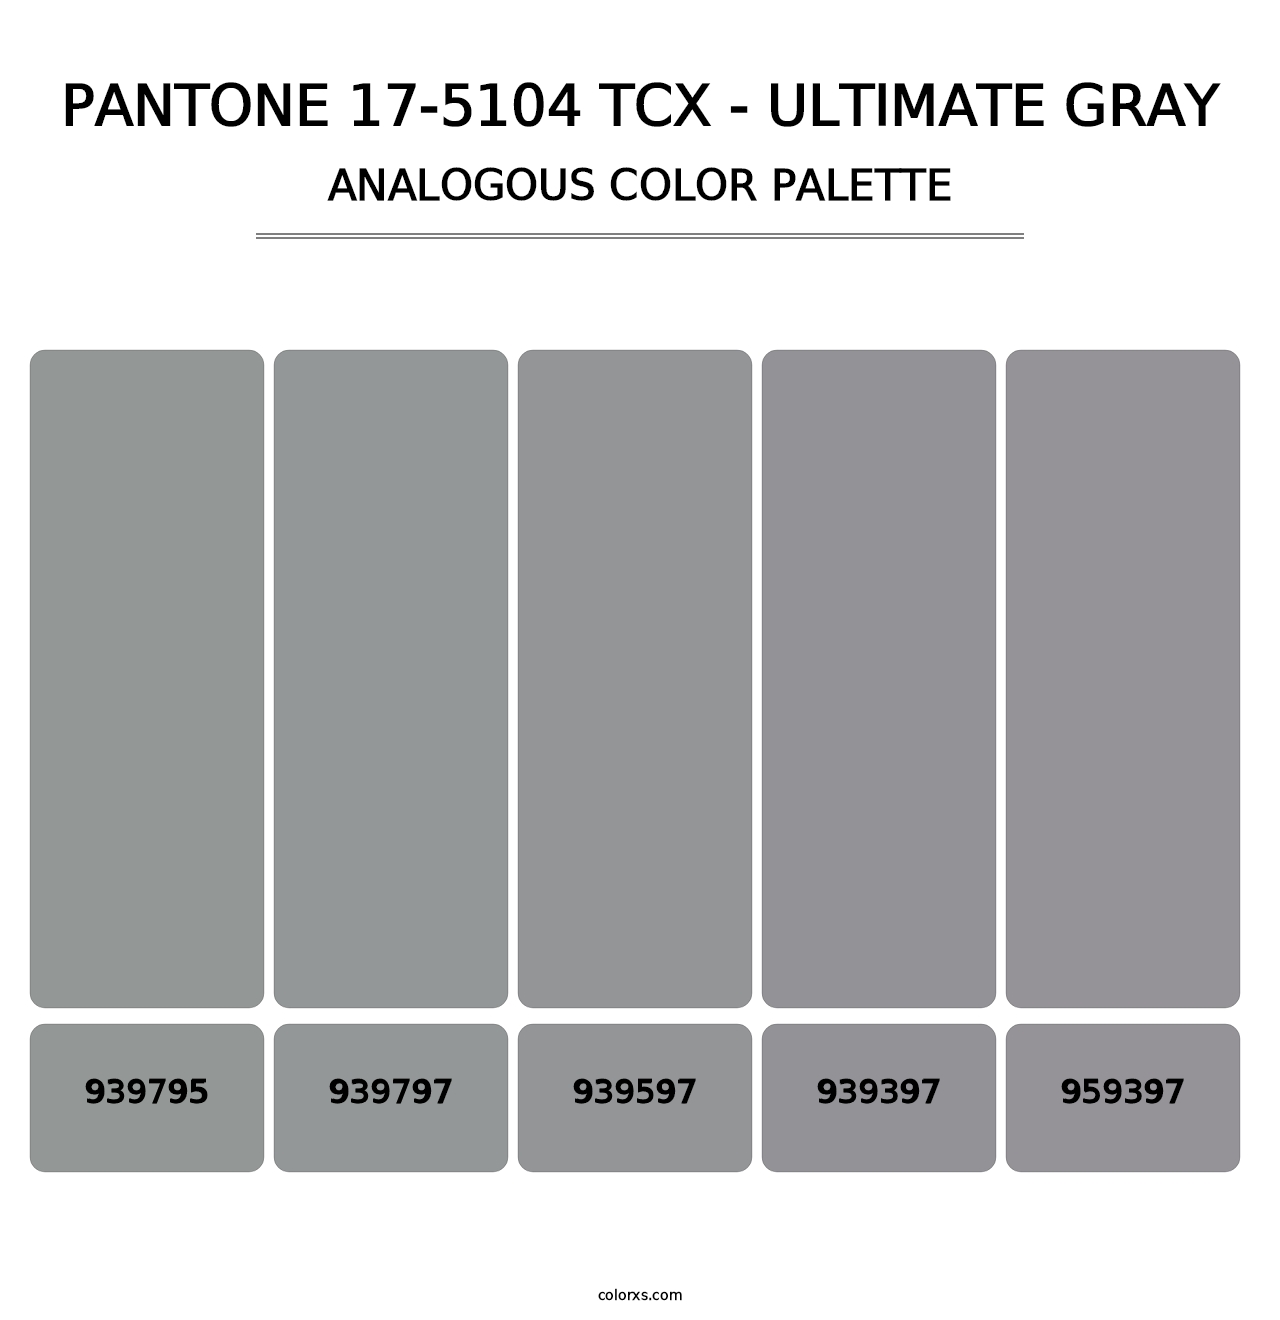 PANTONE 17-5104 TCX - Ultimate Gray - Analogous Color Palette